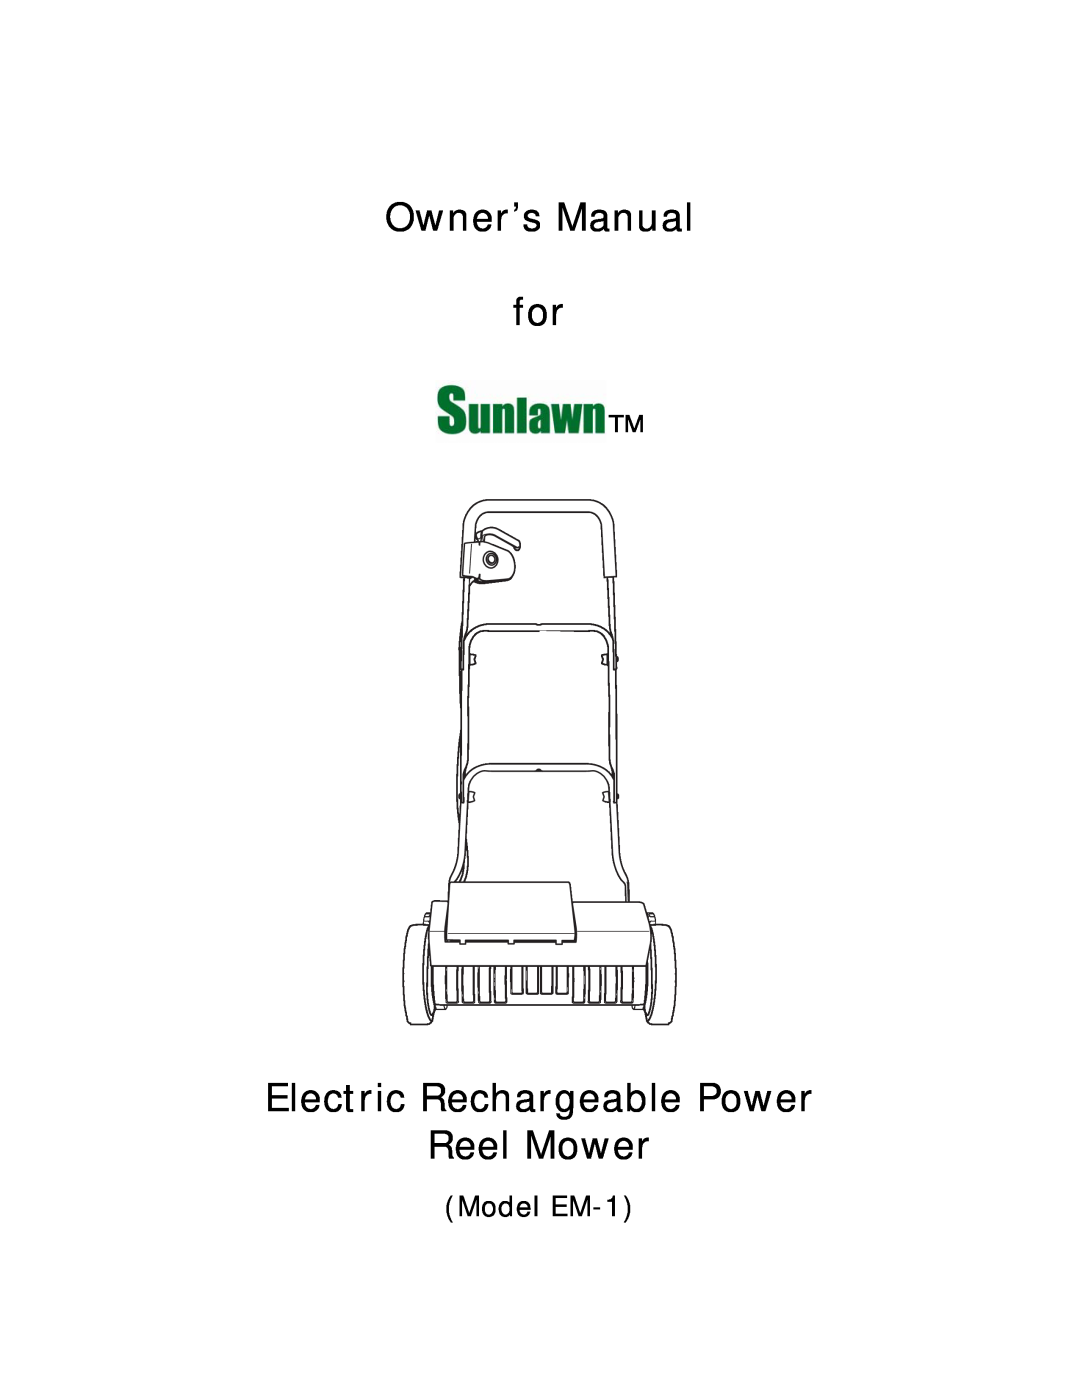 Sun Lawn owner manual Electric Rechargeable Power Reel Mower, Model EM-1 